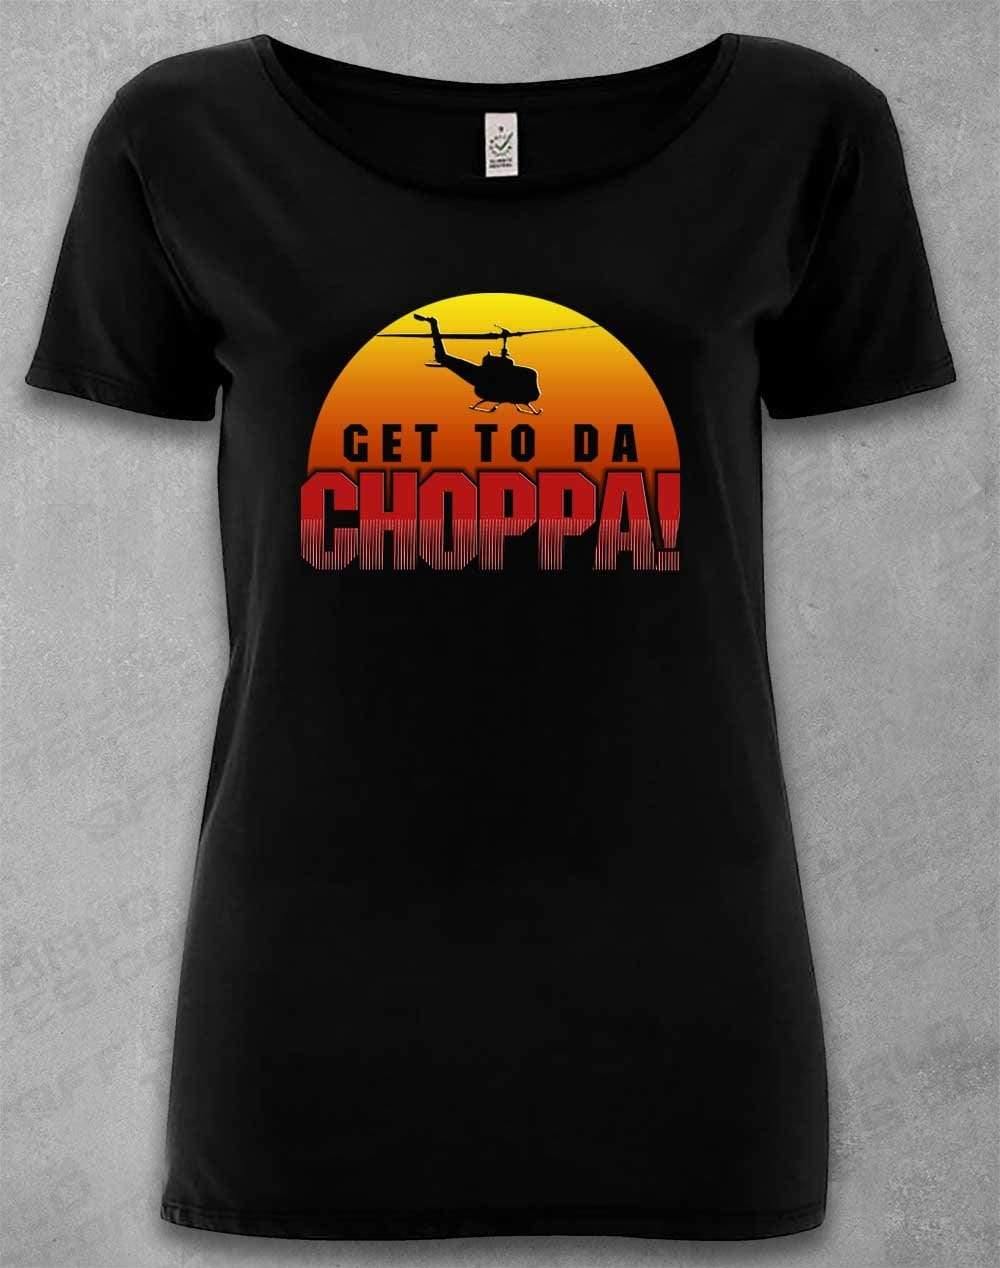 DELUXE Get to da Choppa Organic Scoop Neck T-Shirt 8-10 / Black  - Off World Tees